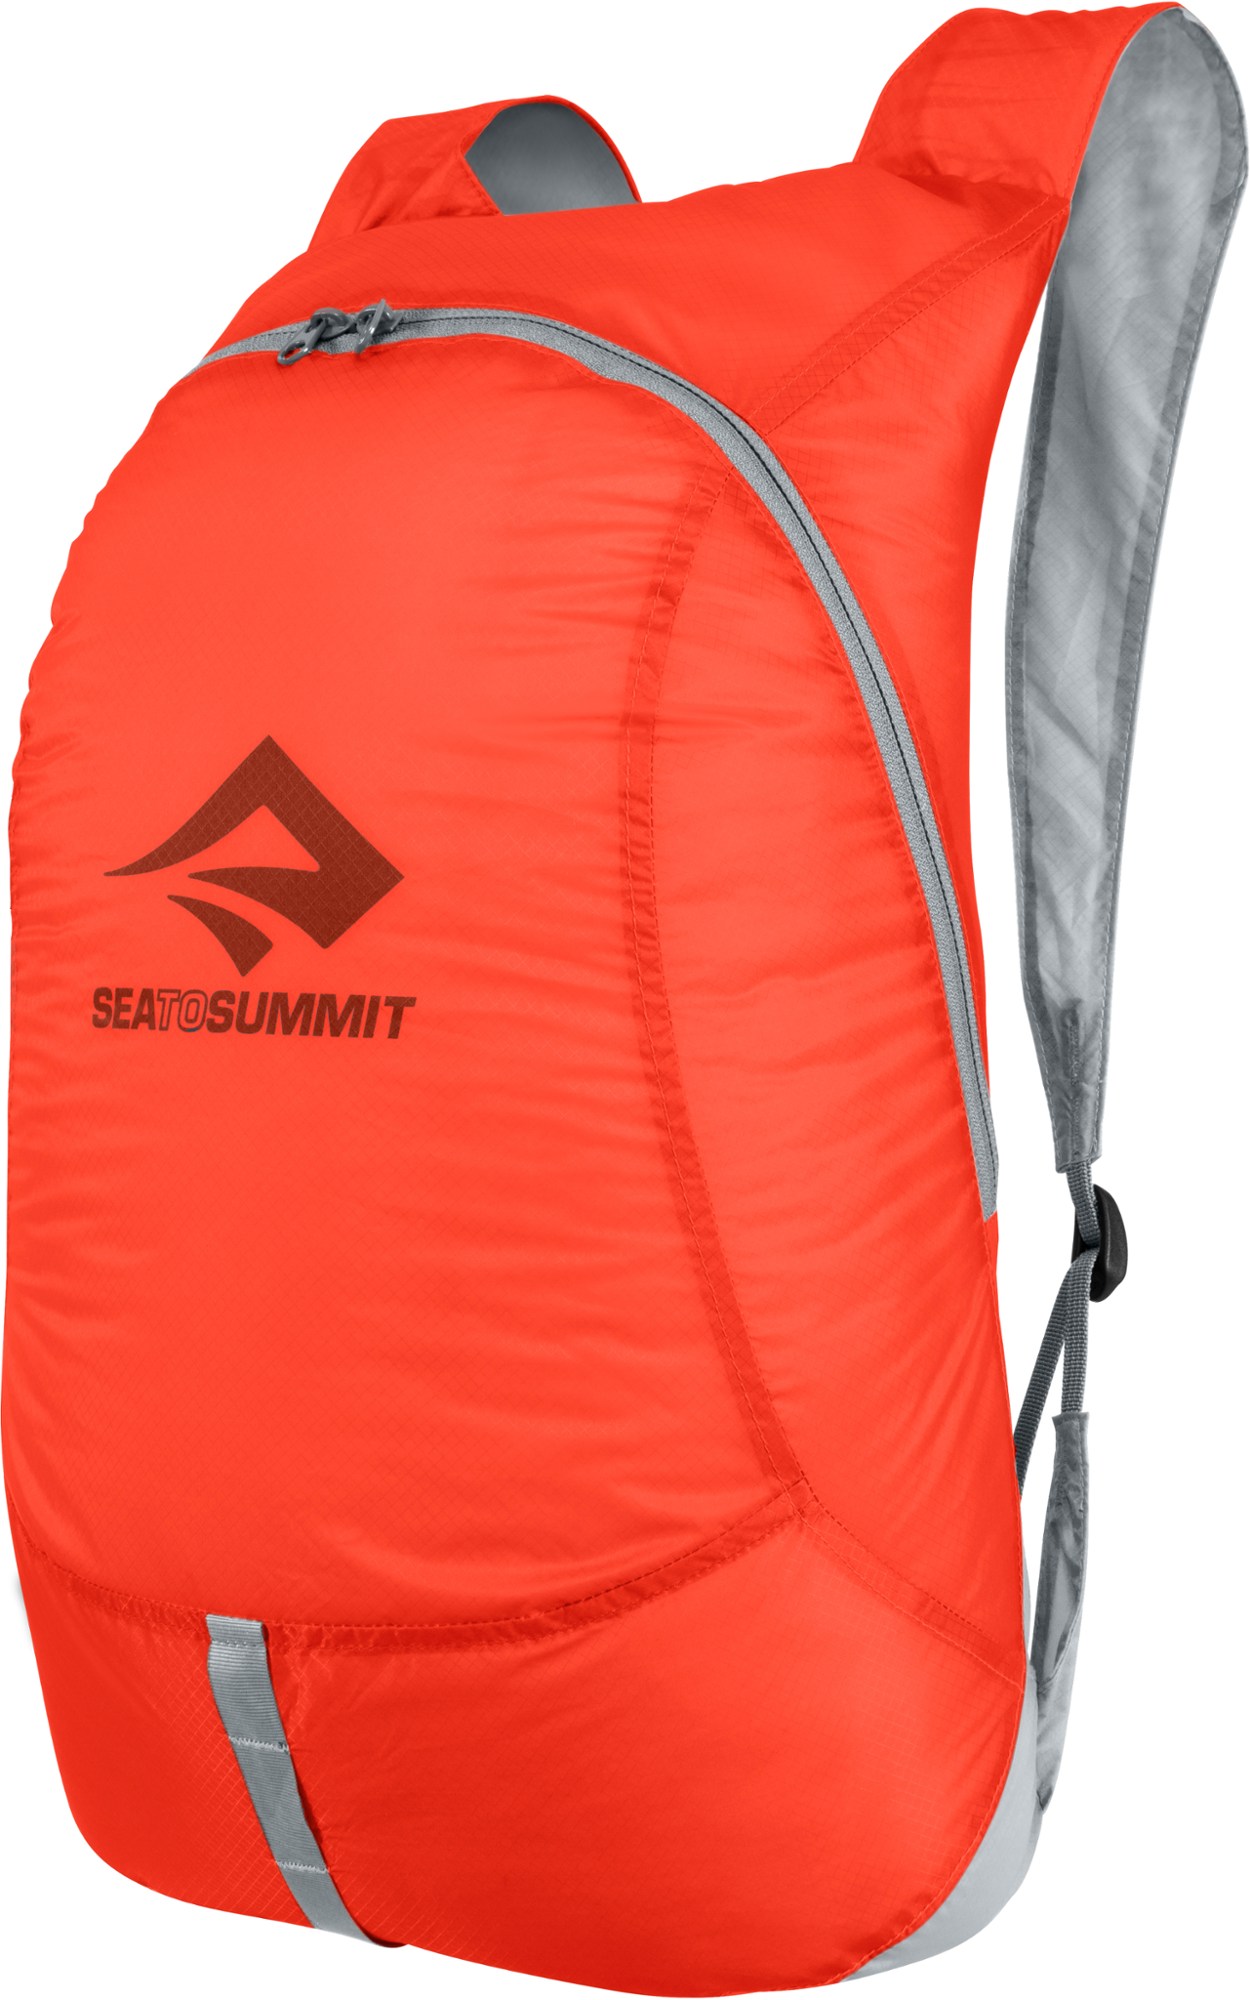 Дневной пакет Ultra-Sil Travel Sea to Summit, оранжевый